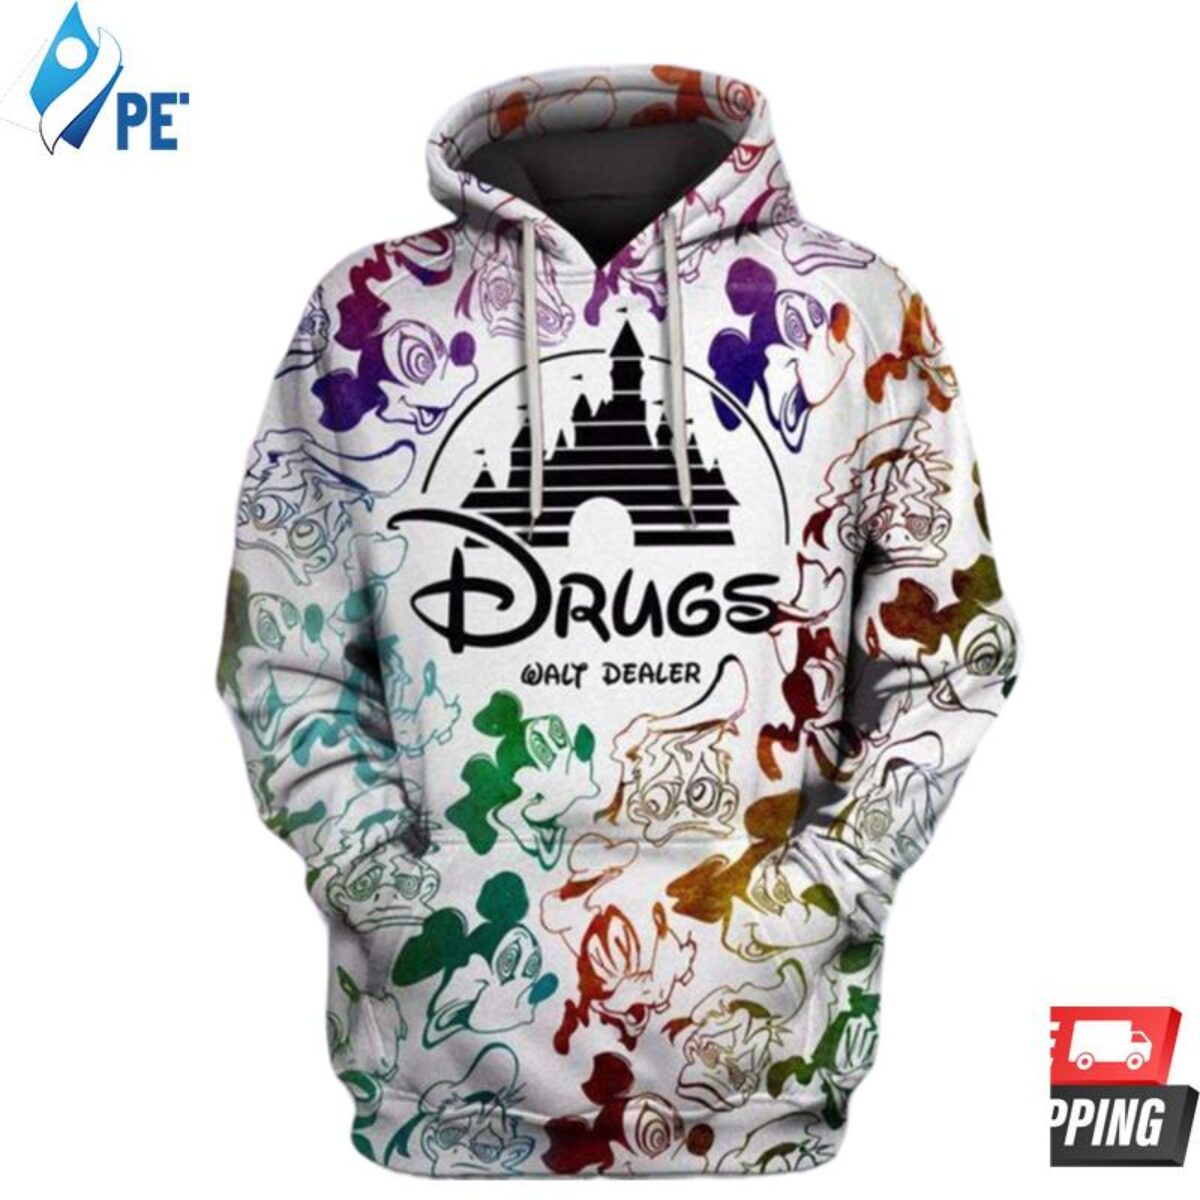 https://petorugs.com/wp-content/uploads/2023/07/Drugs-Walt-Dealer-Disney-3D-Hoodie-1200x1200.jpg